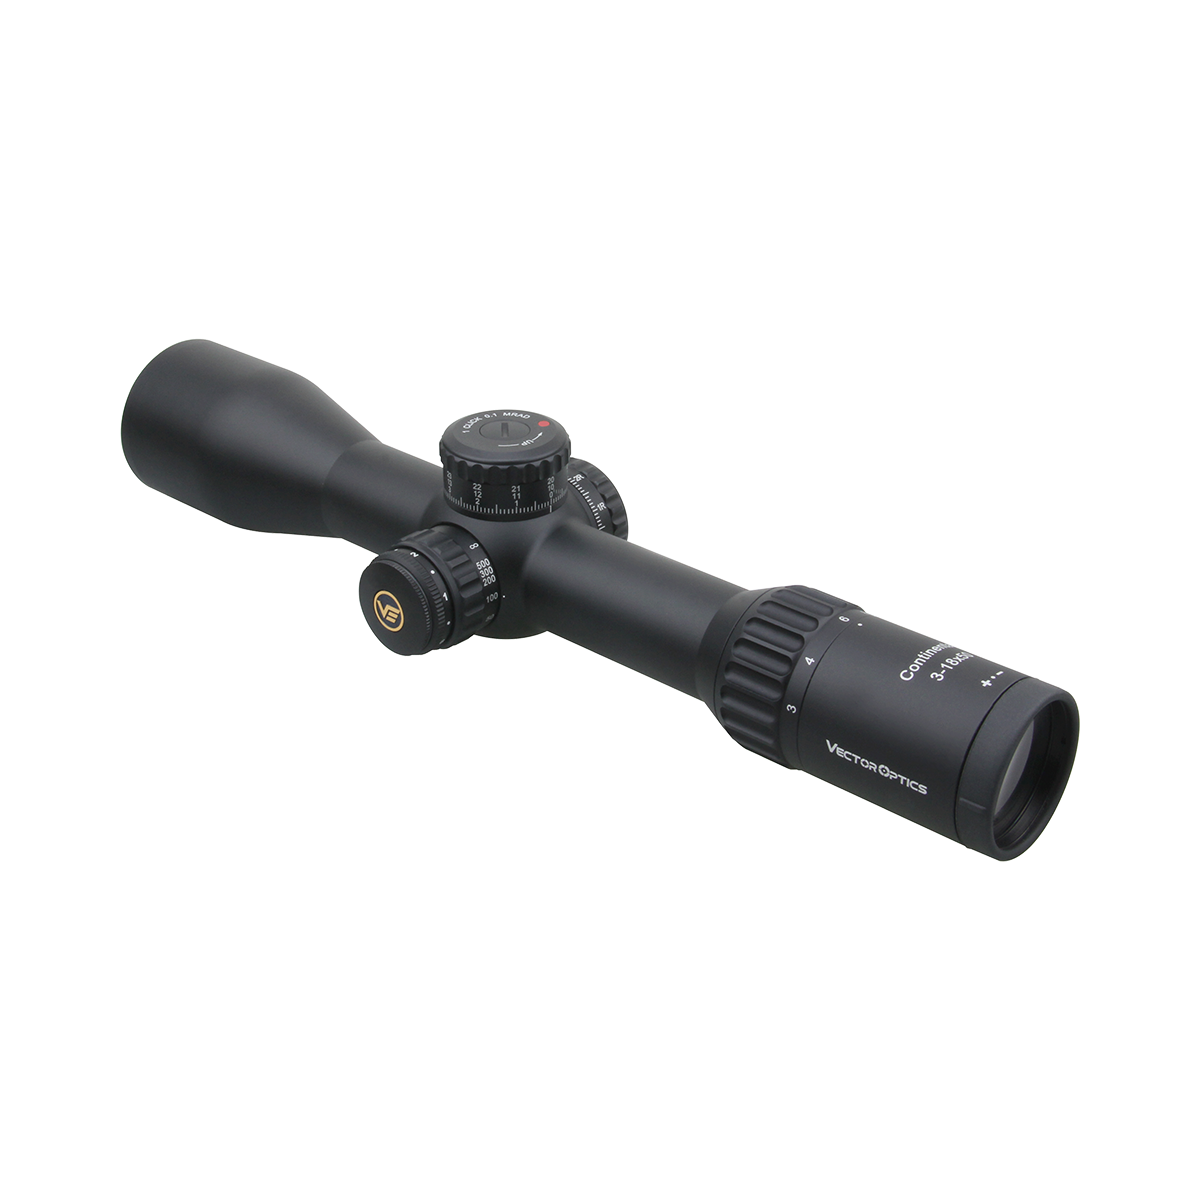 34mm Continental 3-18x50 FFP Riflescope